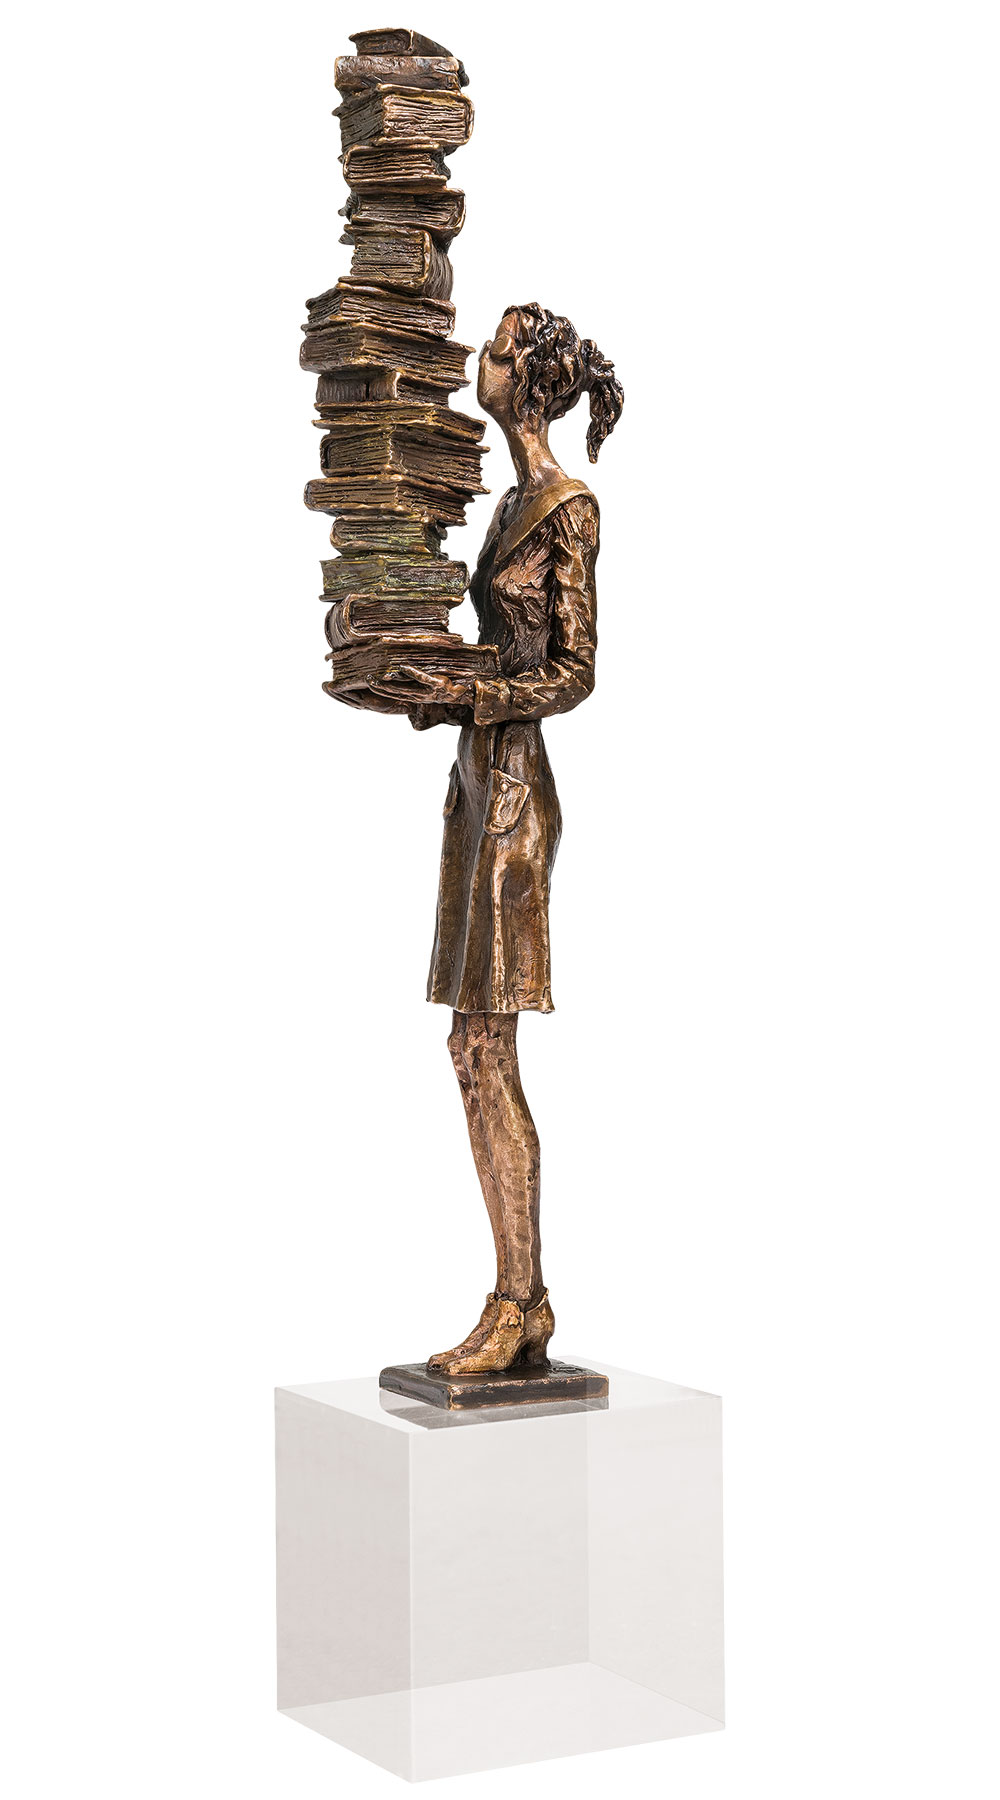 Sculpture "Balance Sheet of an Accountant", bronze by Vitali Safronov